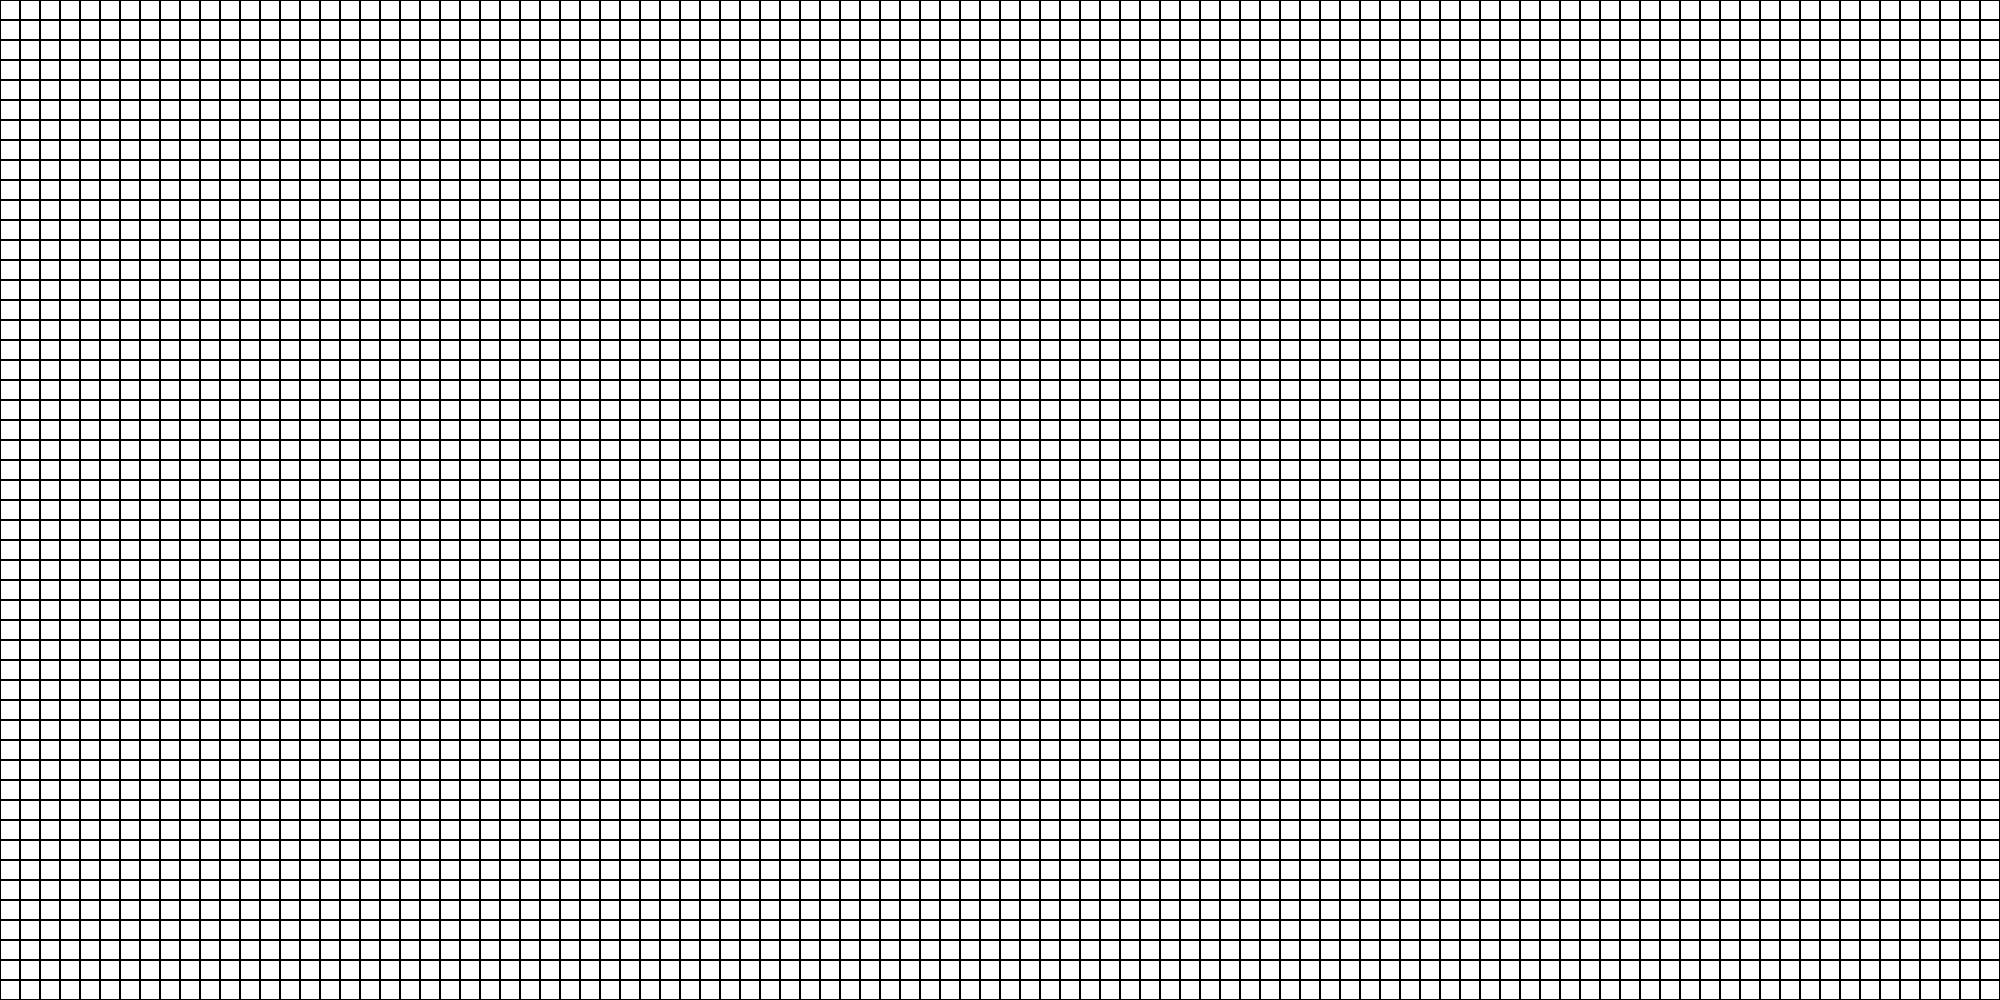 input_images/grid.png